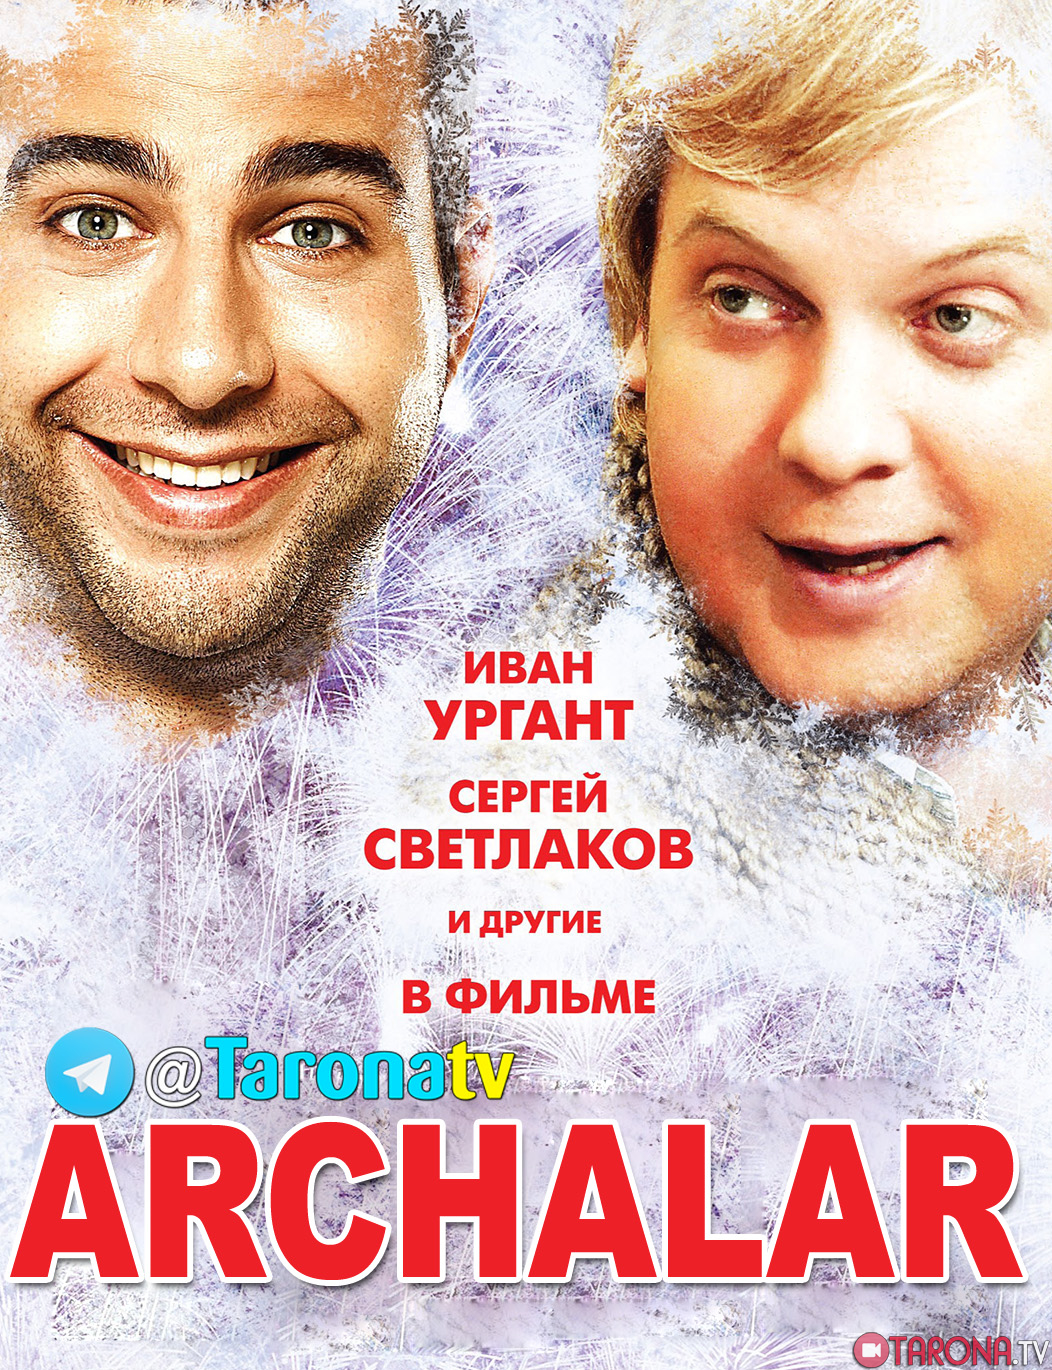 Archalar Rossiya filmi, Uzbek tilida 2010